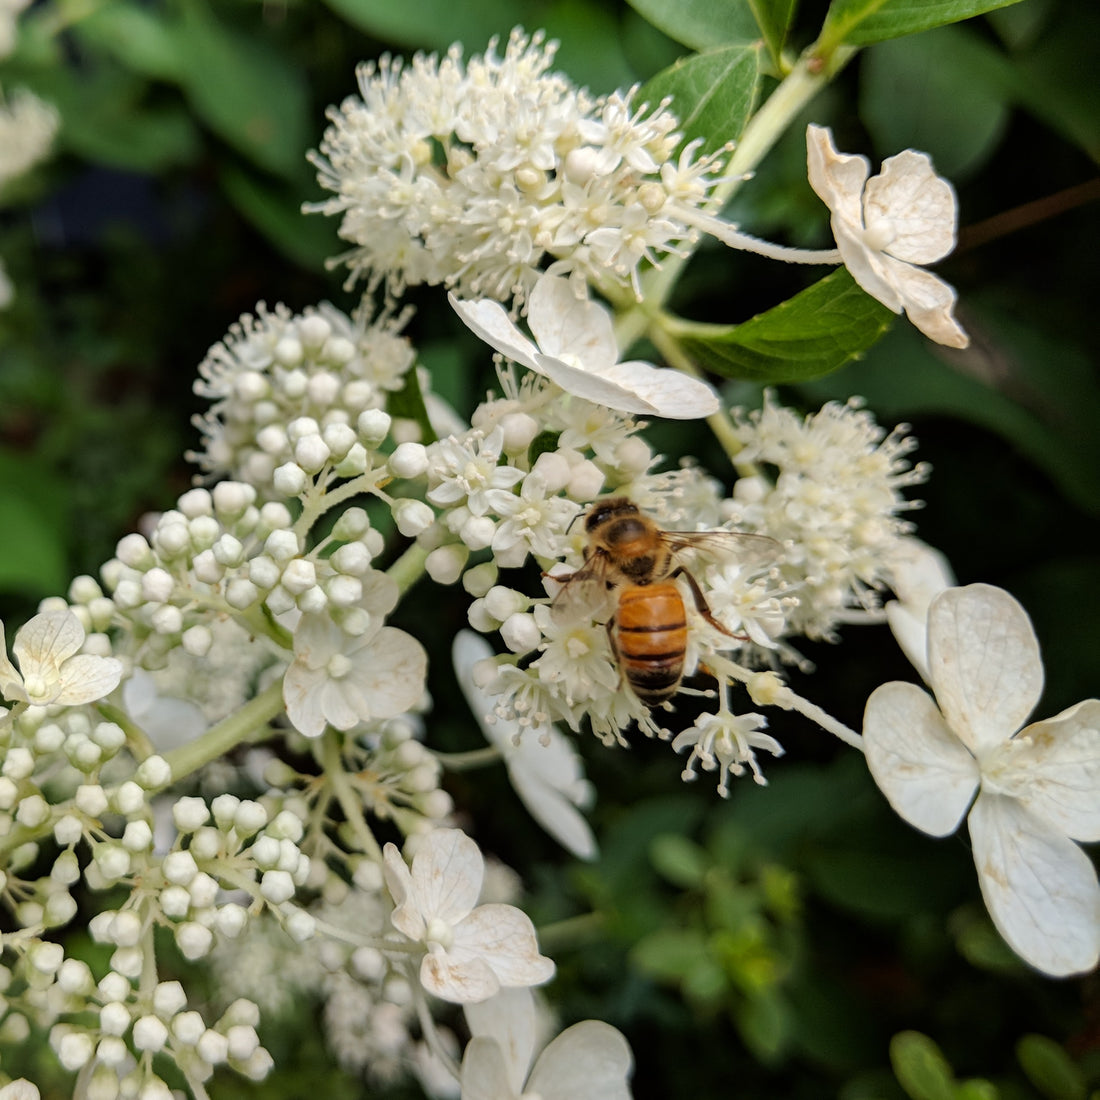 Honeybee on hydrangea bloom - August